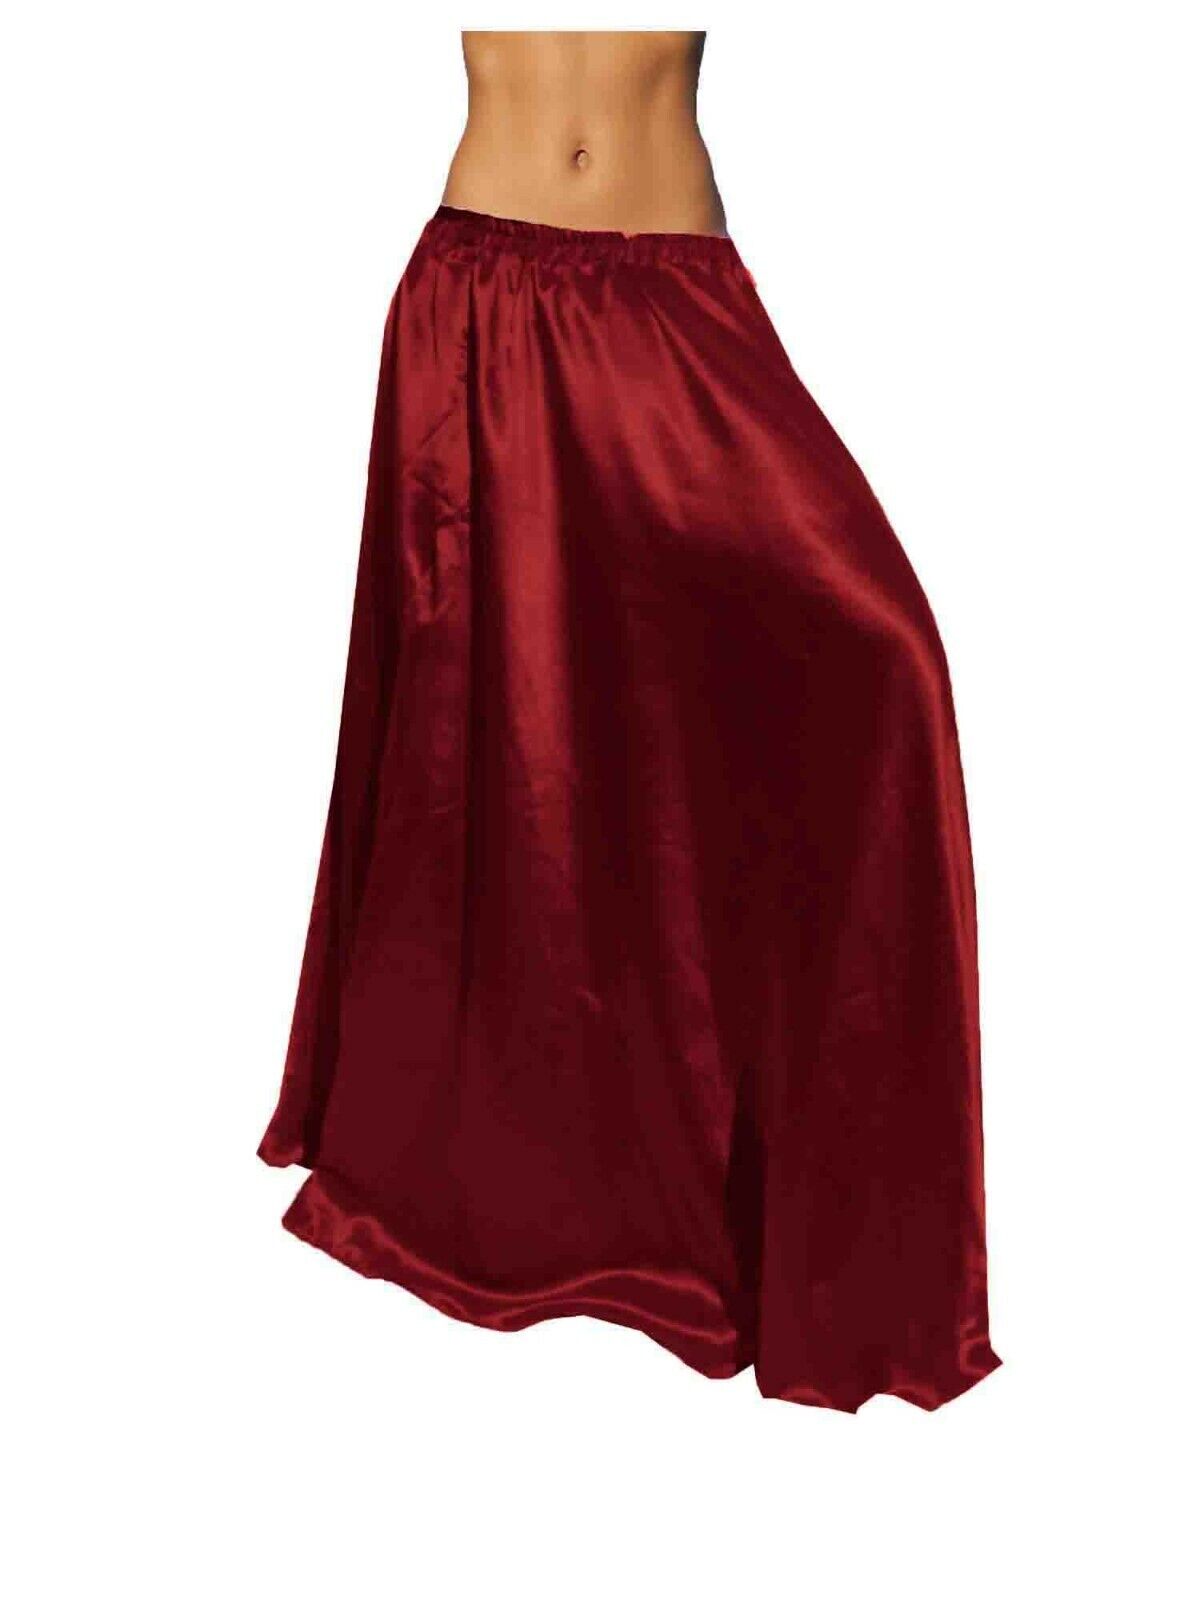 Half Circle Skirt Flowing Skirt Maroon Color Spanish Flamenco Wo